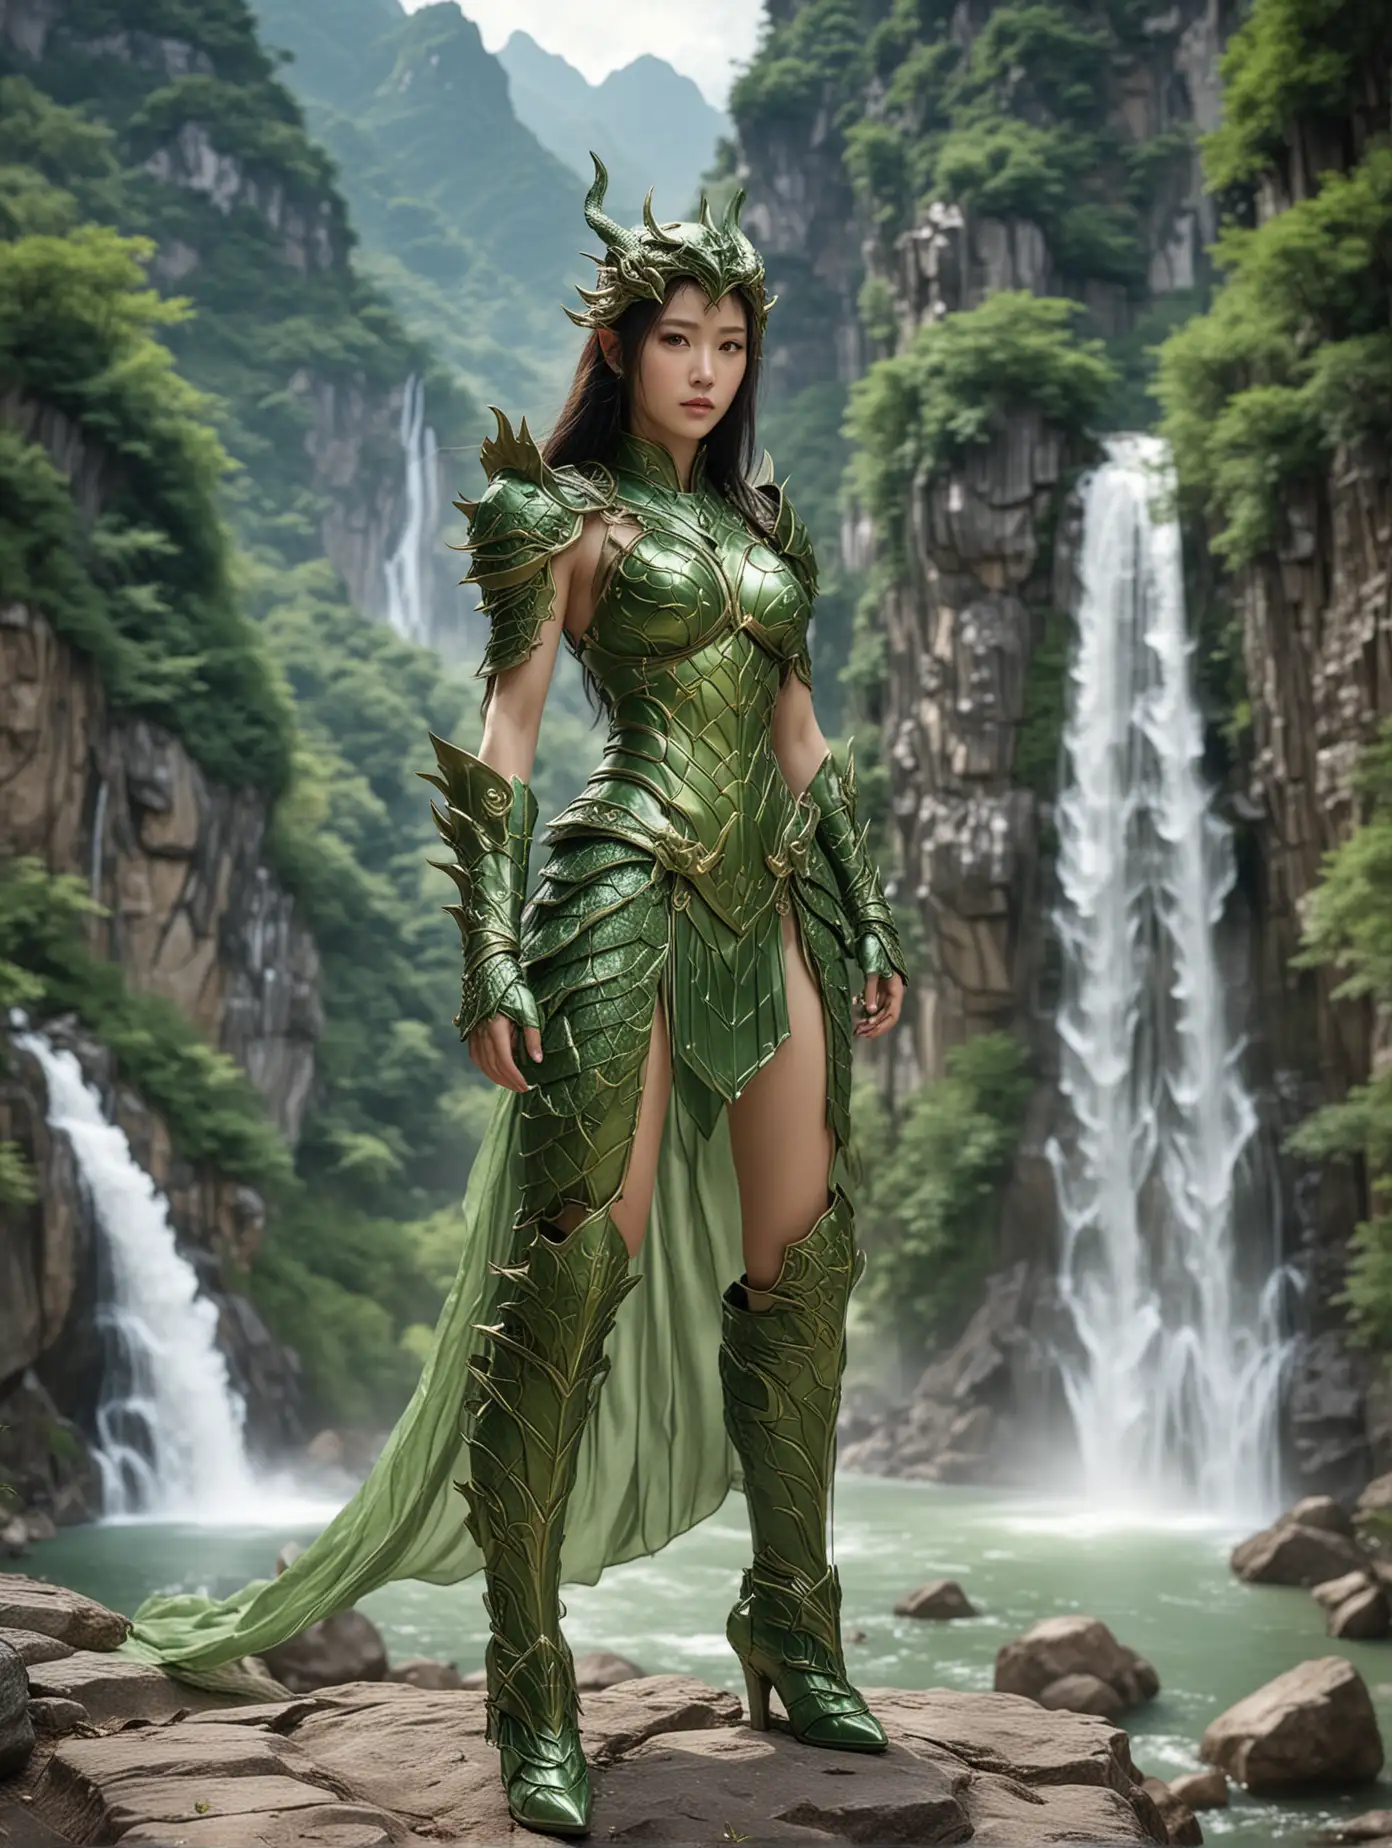 Chinese Warrior Goddess in Green Divine Armor Amidst Serene Mountains